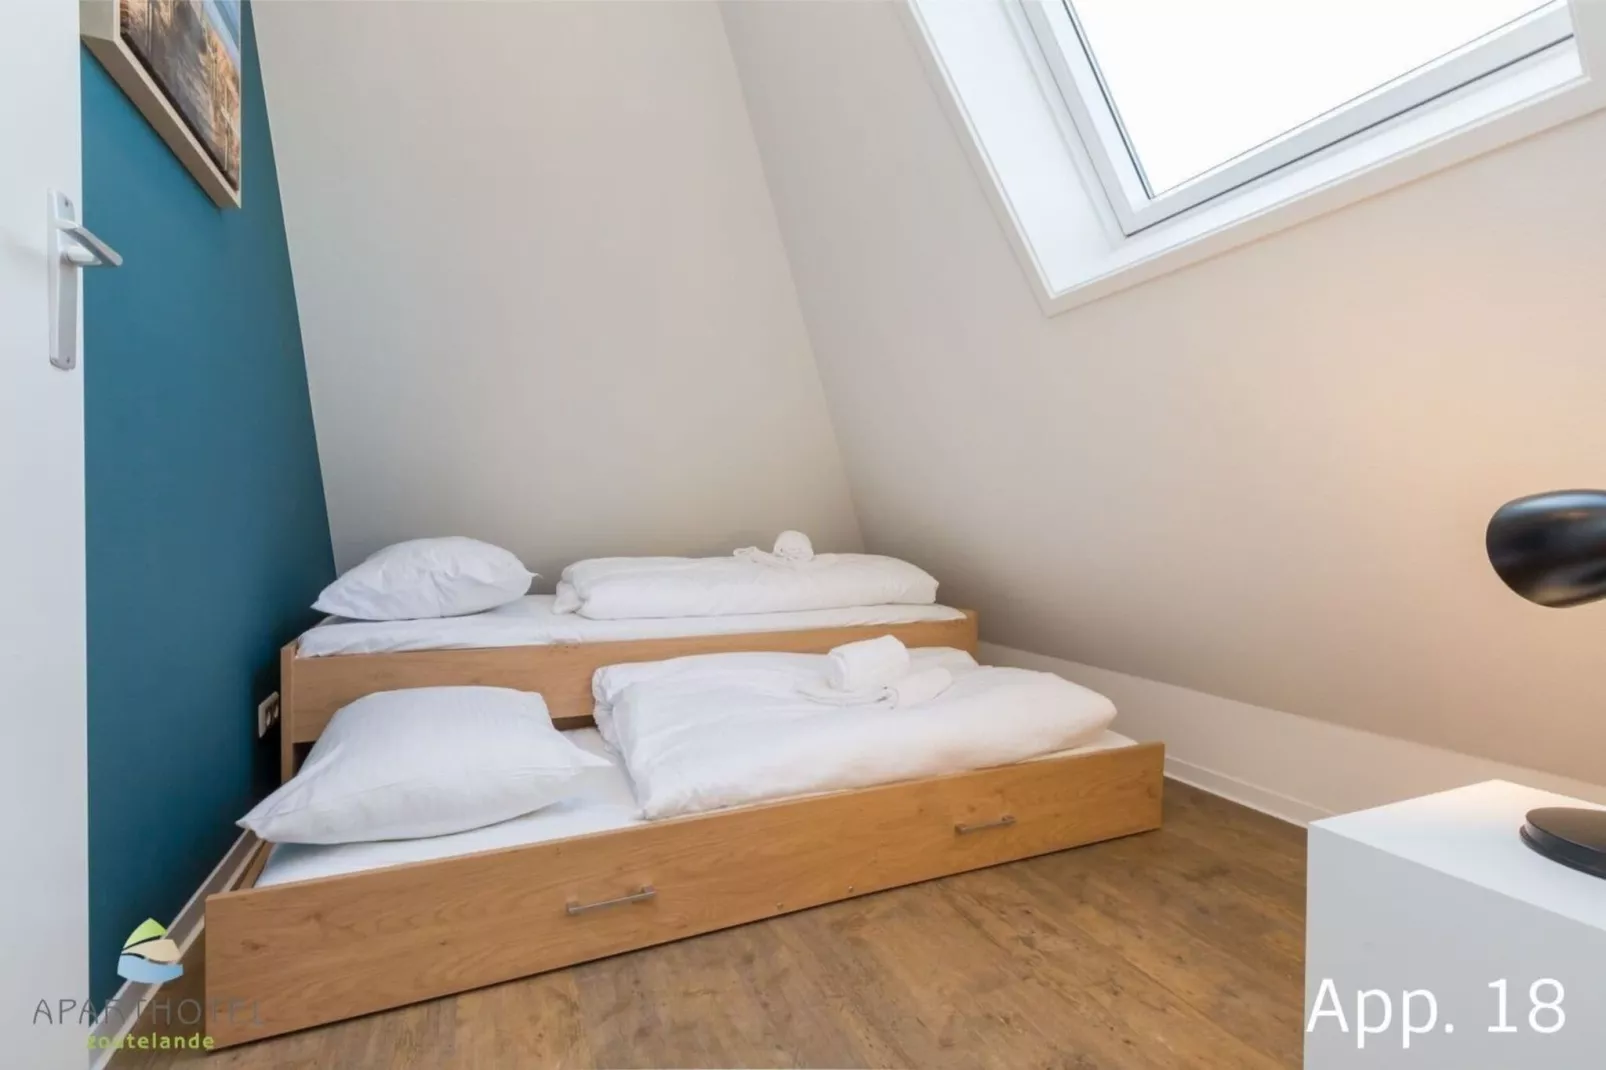 Aparthotel Zoutelande - 6 pers luxe appartement huisdier-Slaapkamer